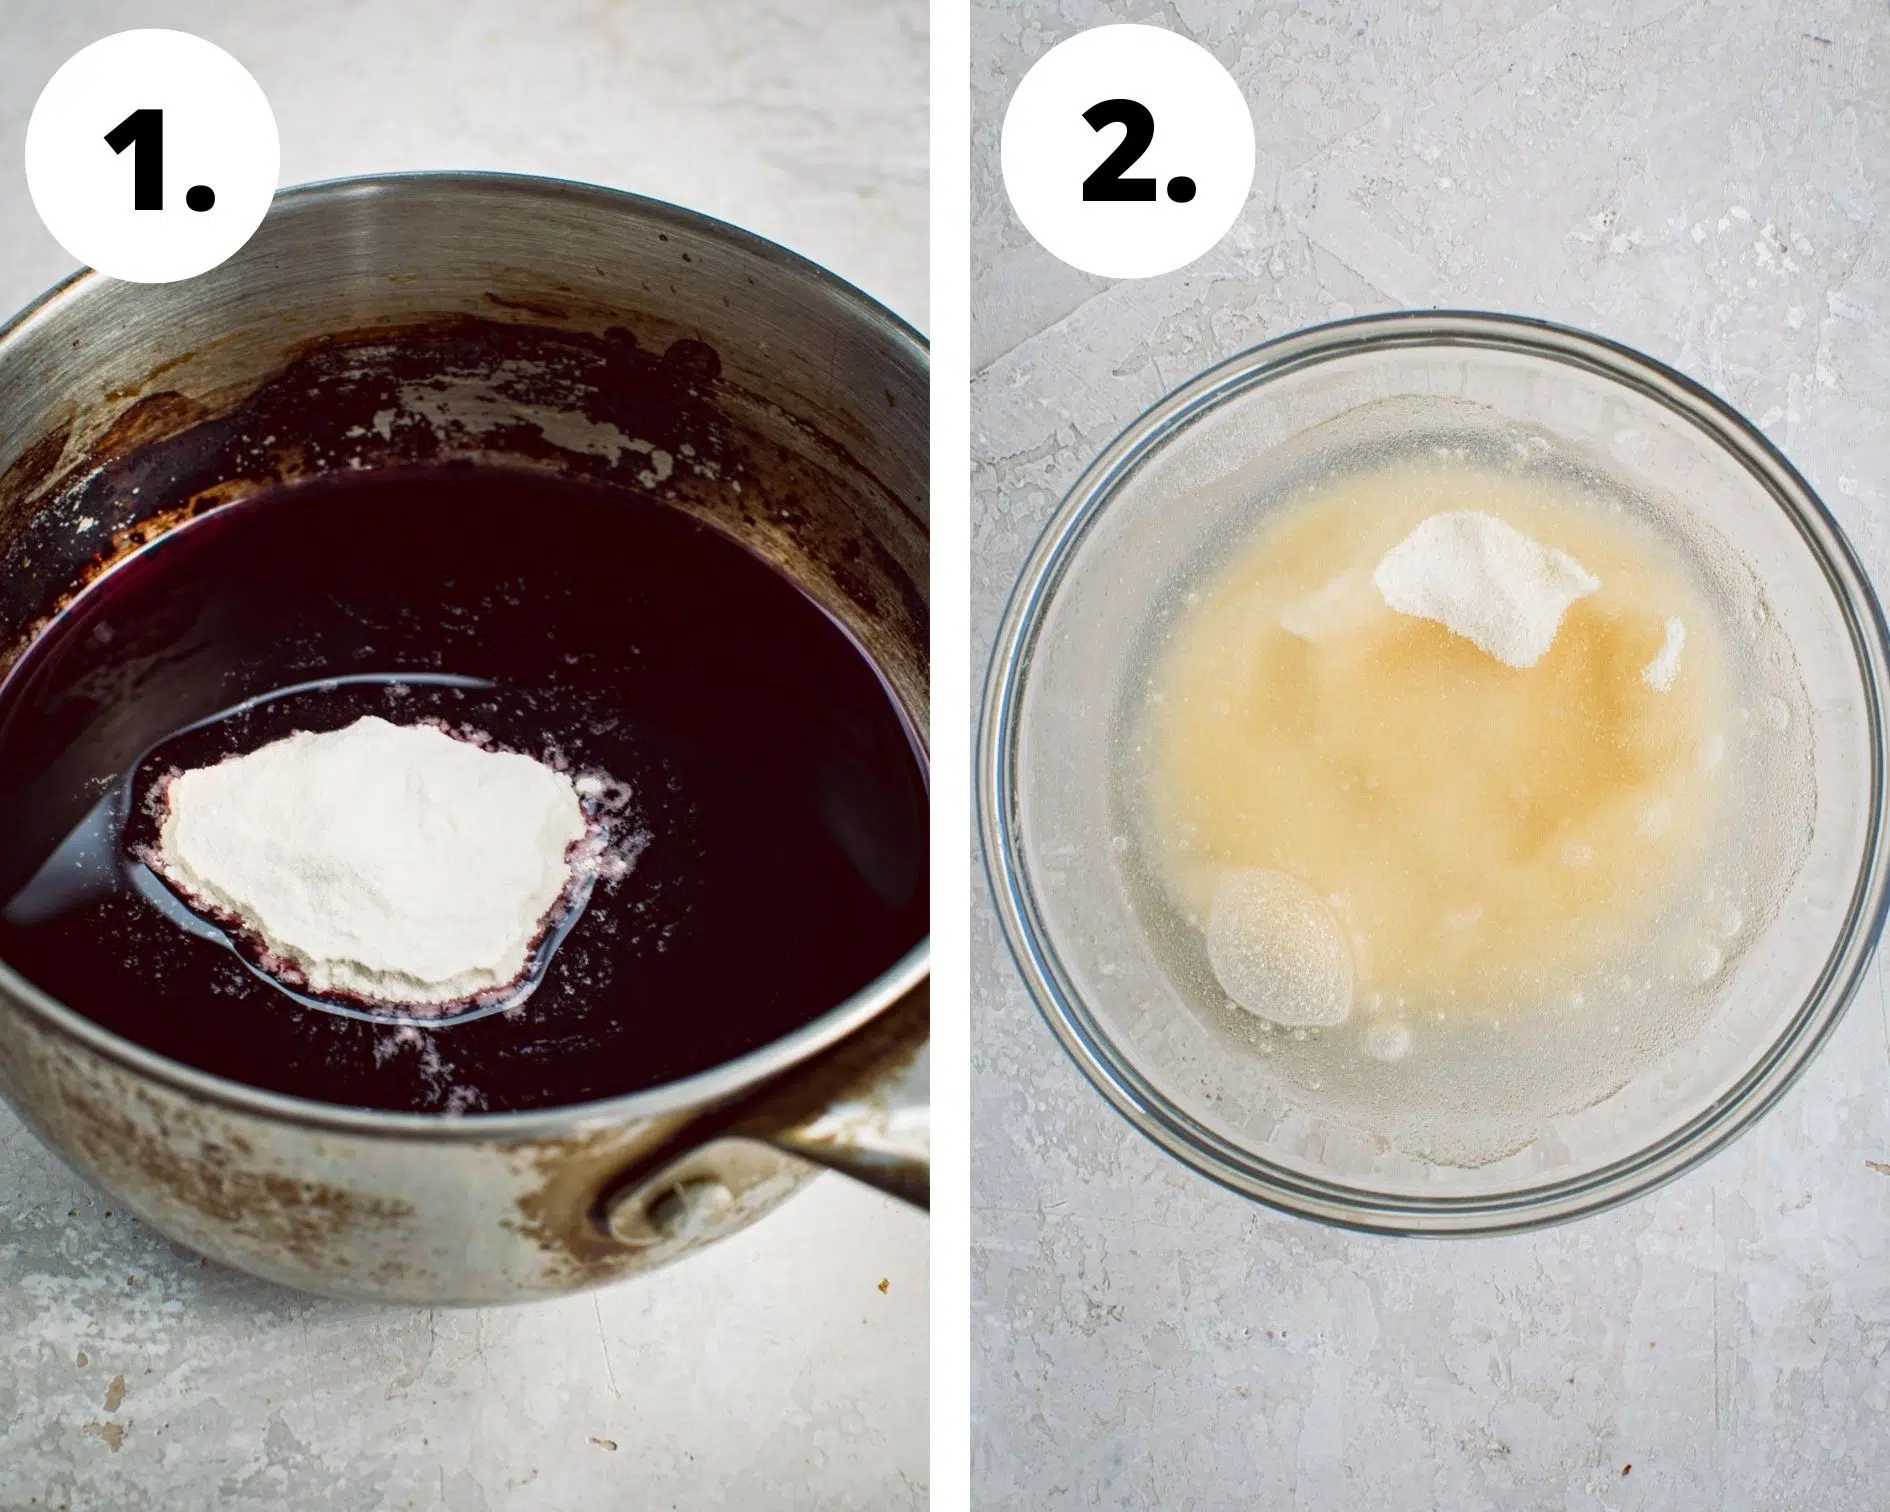 Homemade gummy bears process steps 1 and 2.